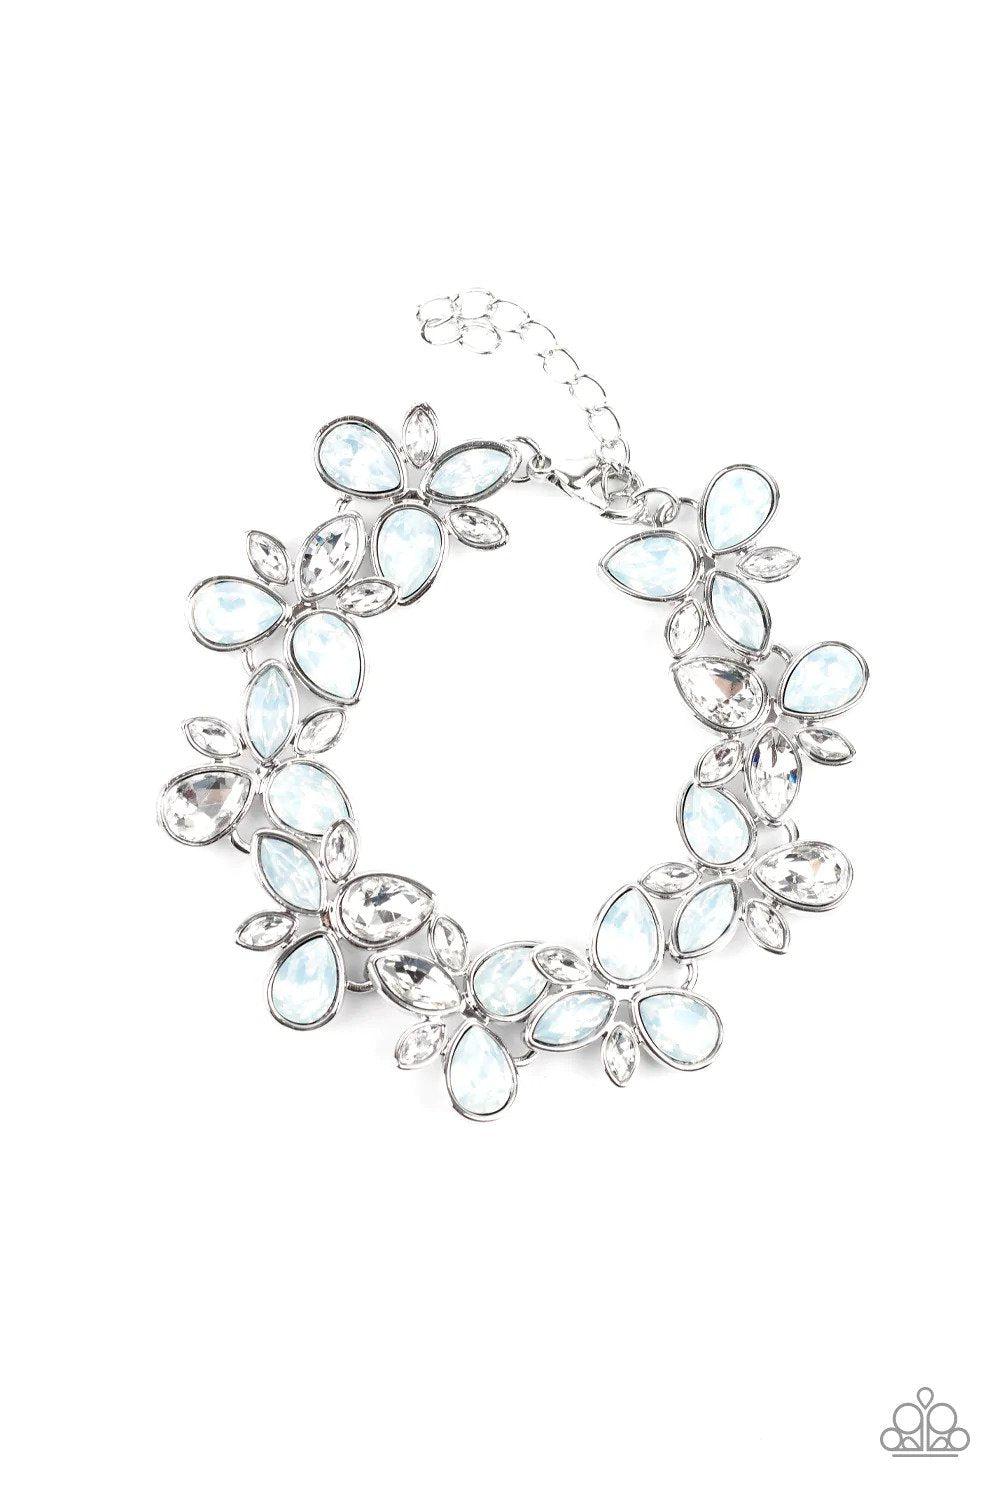 Ice Garden White Bracelet - Paparazzi Accessories- lightbox - CarasShop.com - $5 Jewelry by Cara Jewels